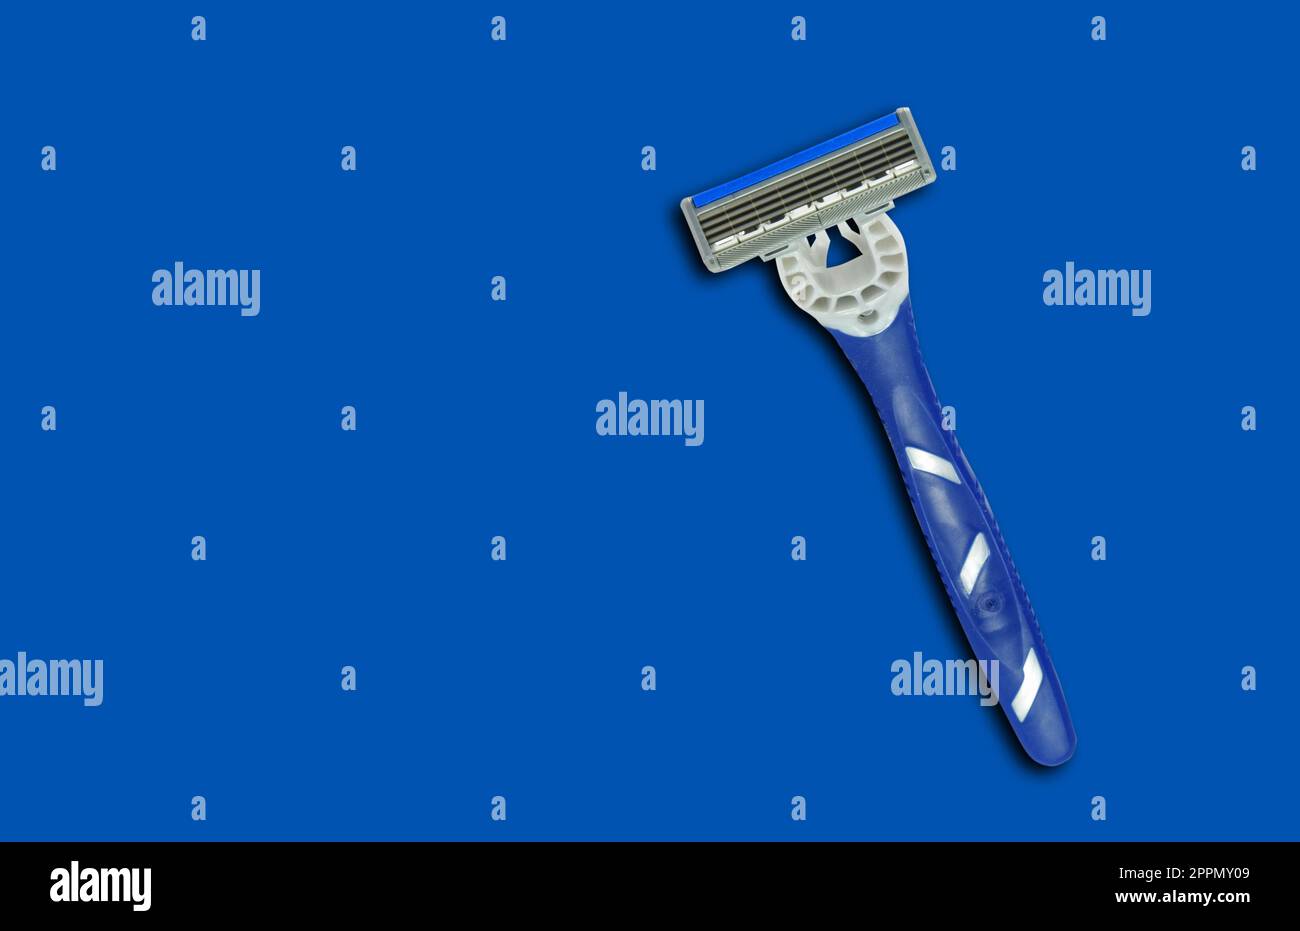 Blue shave razor on the blue Stock Photo